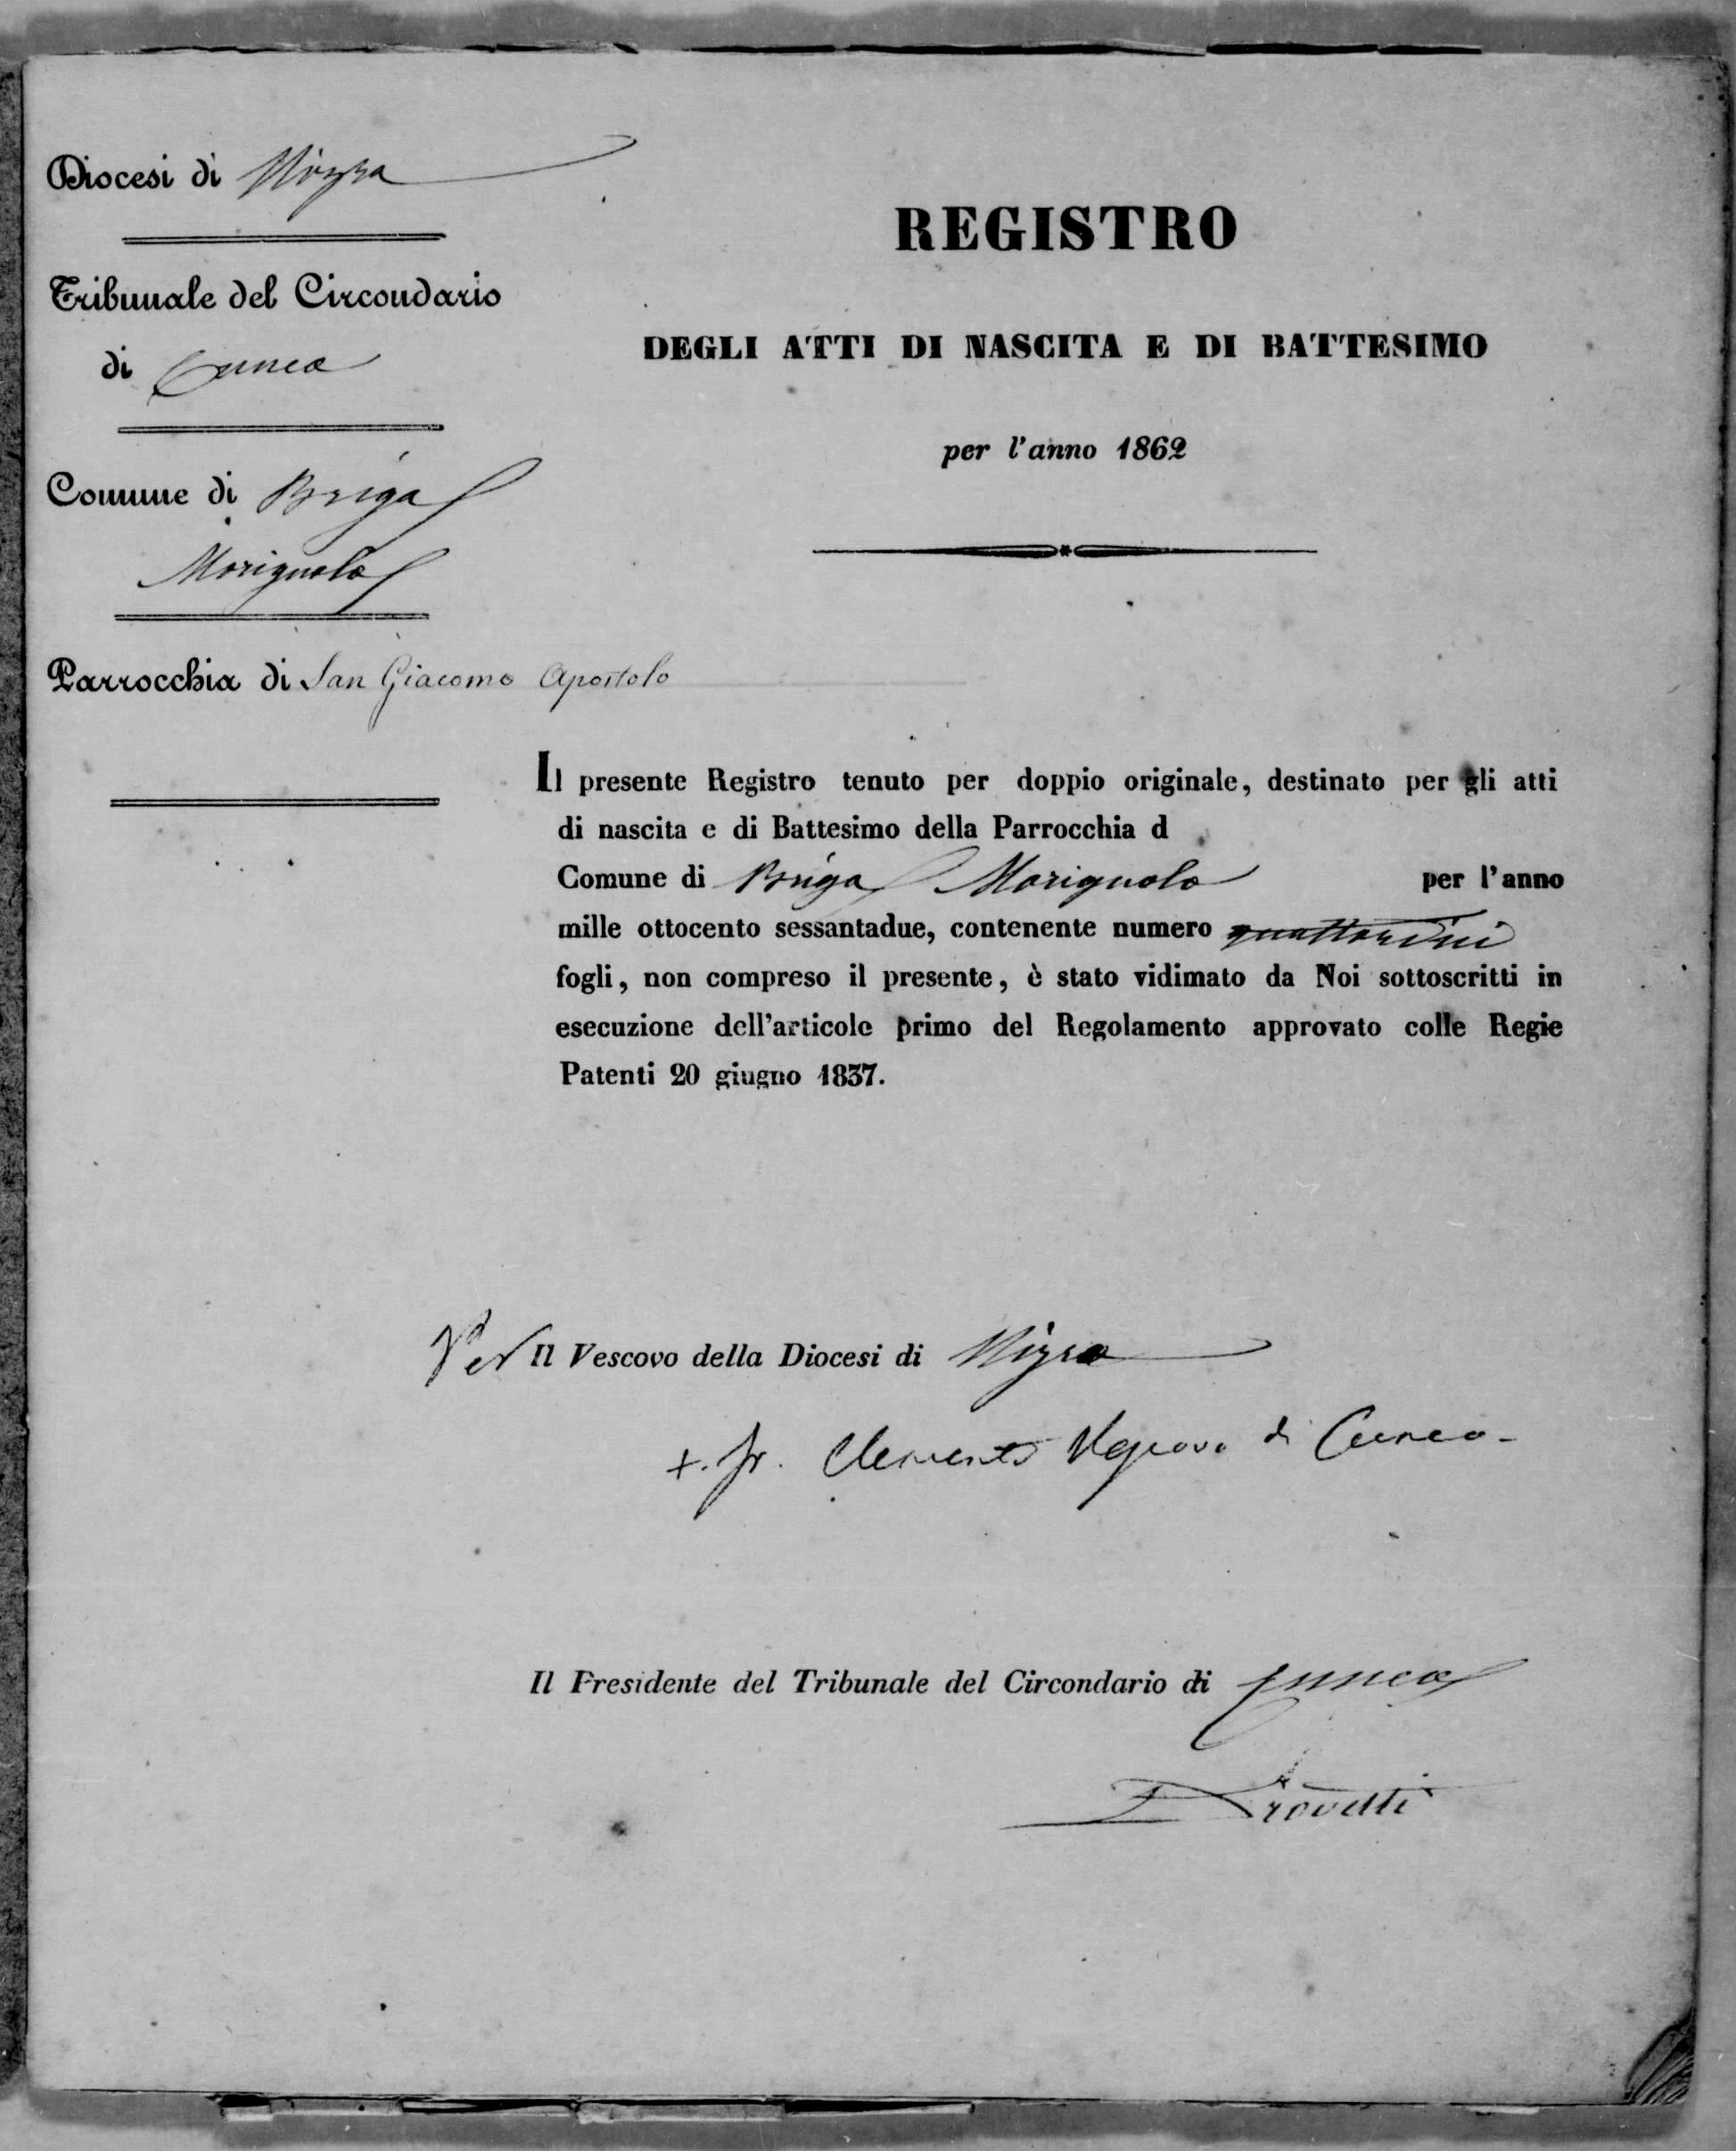 registre 1861